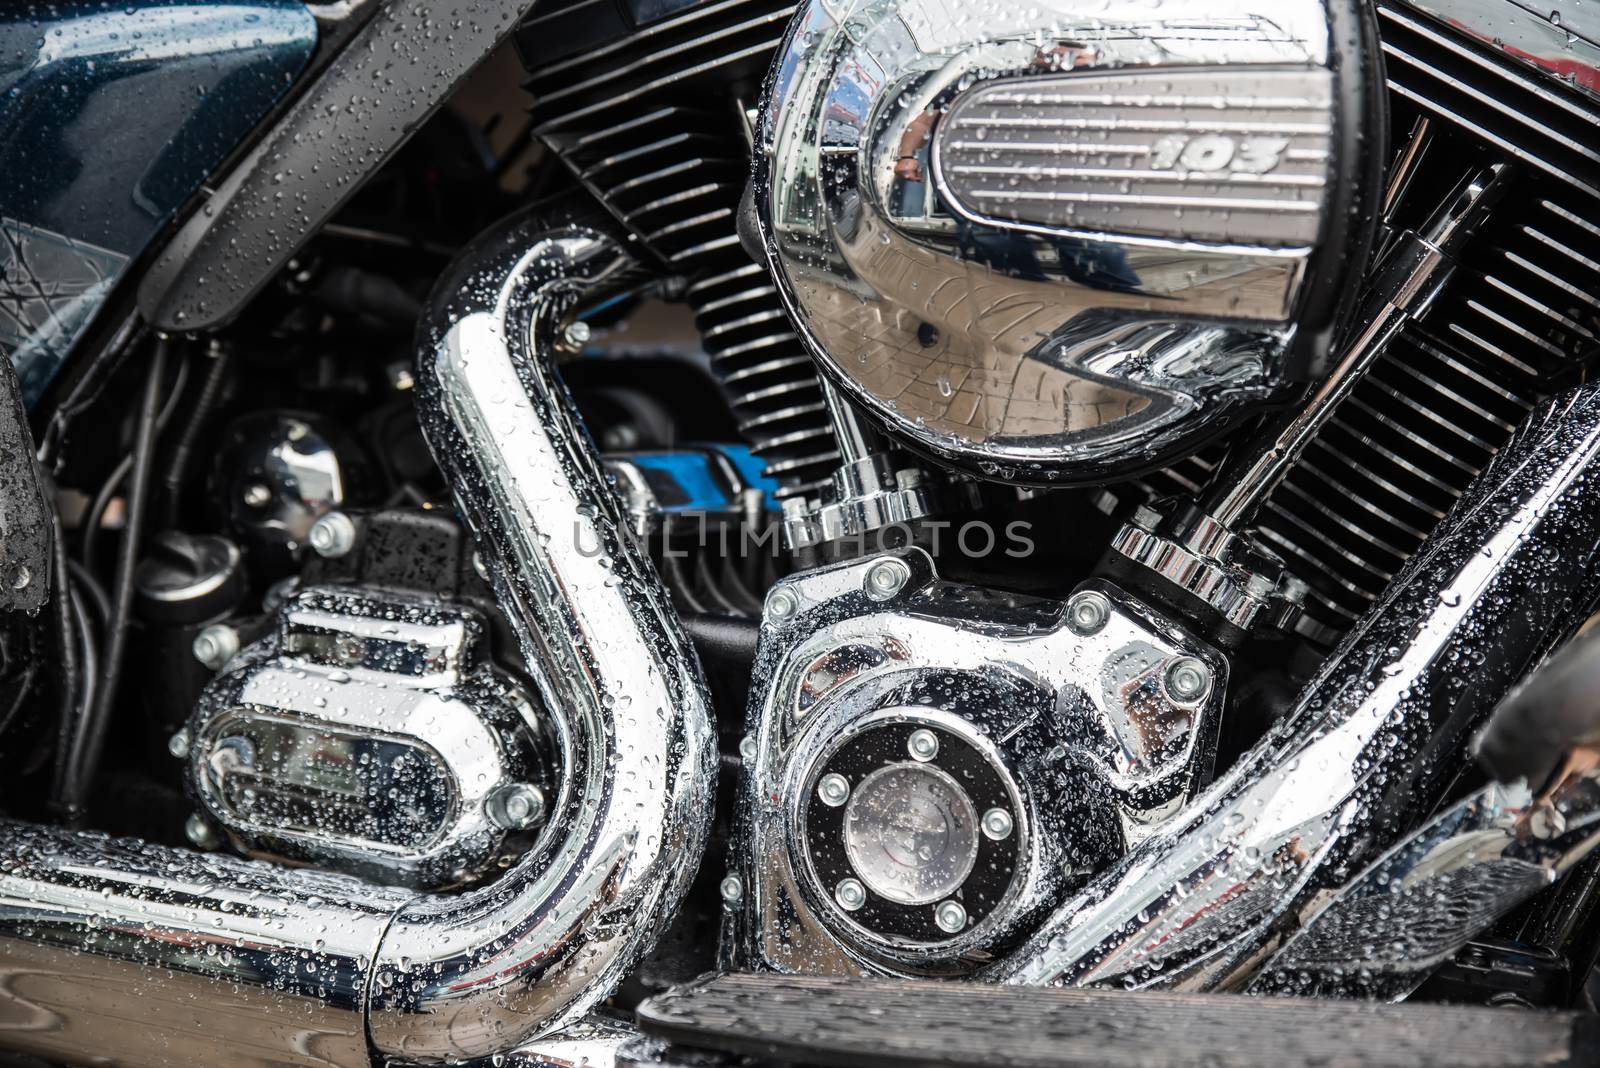 Detail of motorcycle engine by sarymsakov